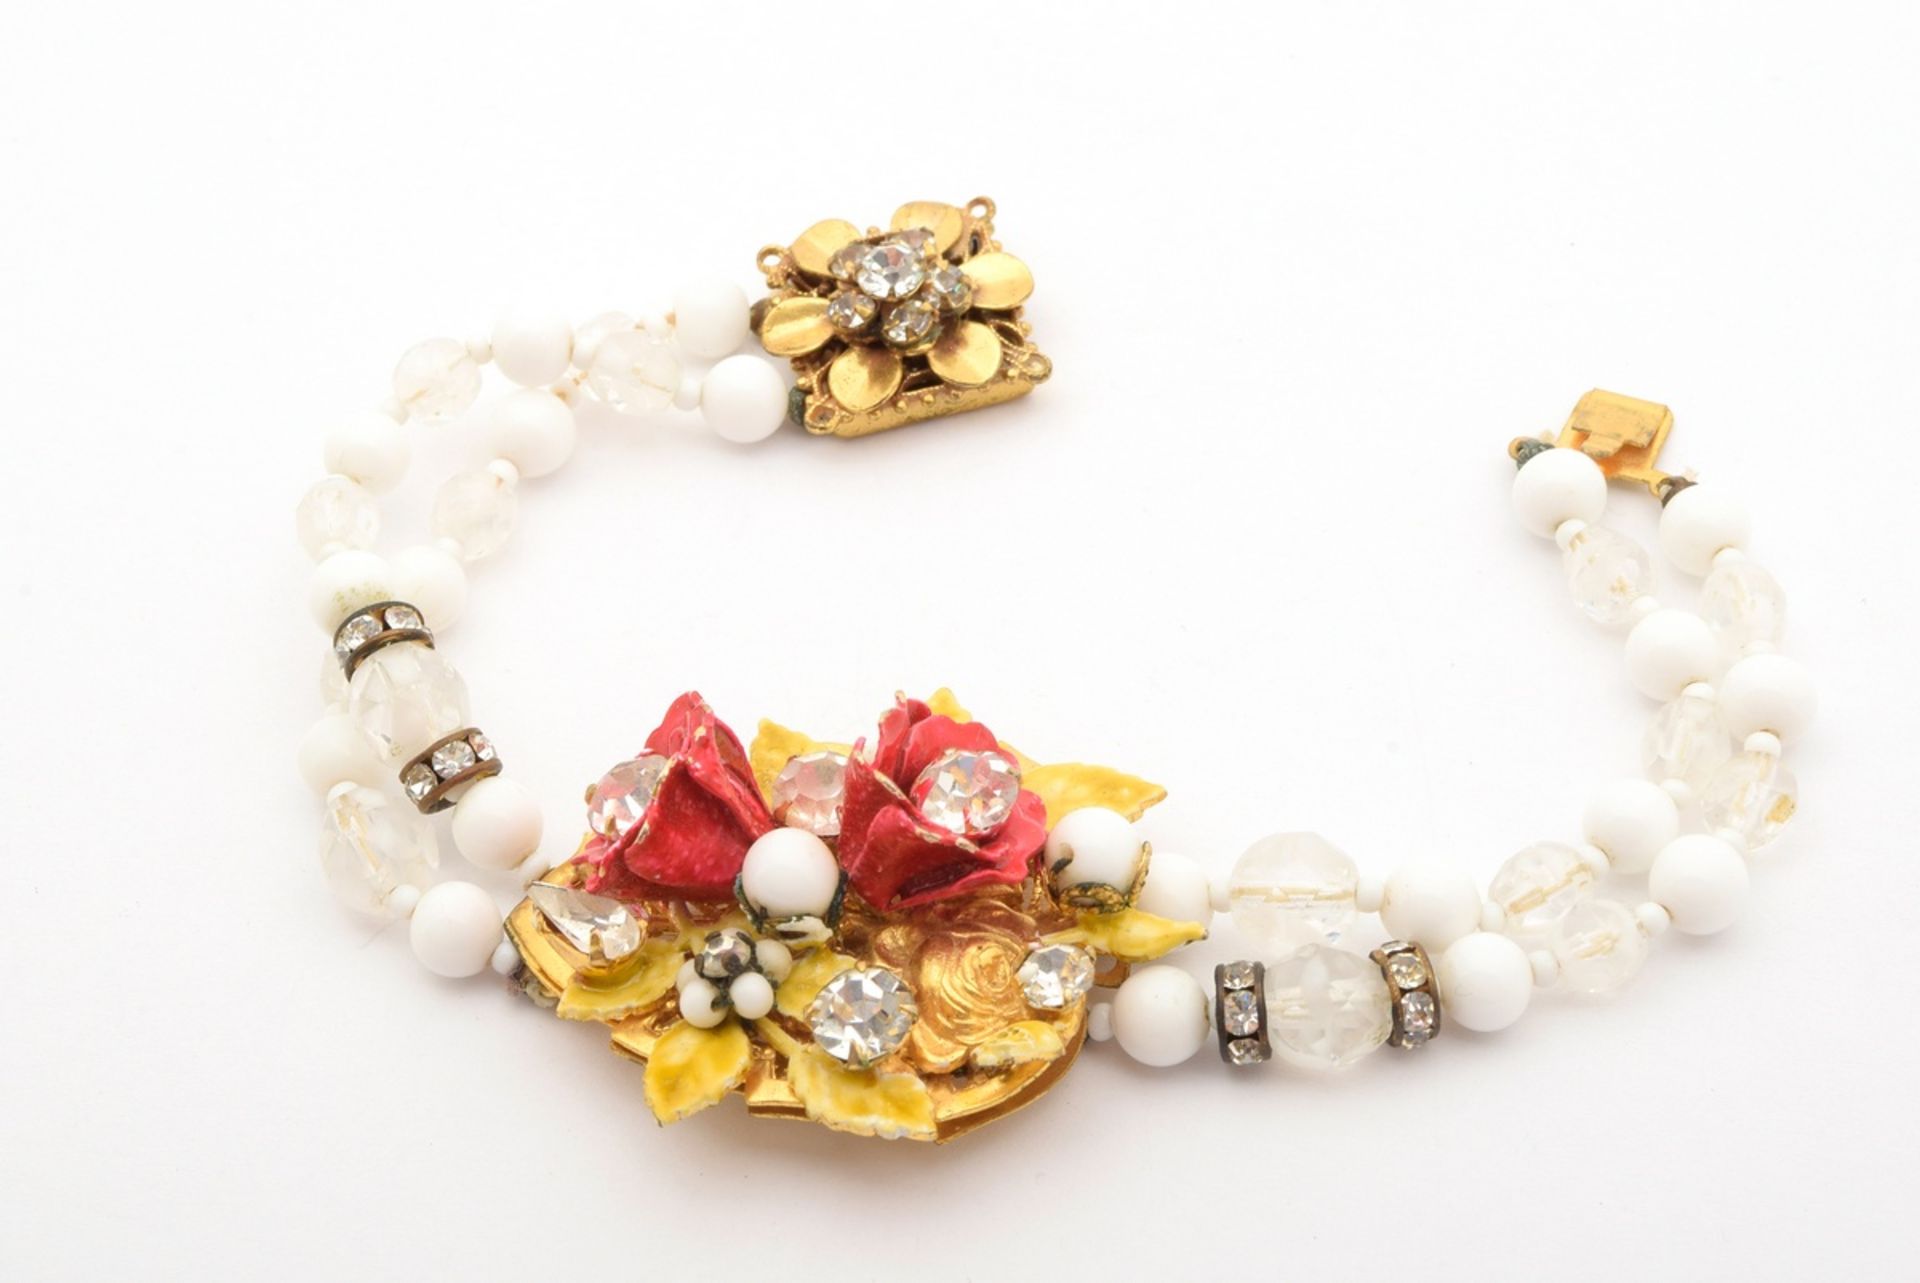 4 pieces costume jewellery set with enamel, rhinestones, glass beads and plastic beads, around 1950 - Image 7 of 9